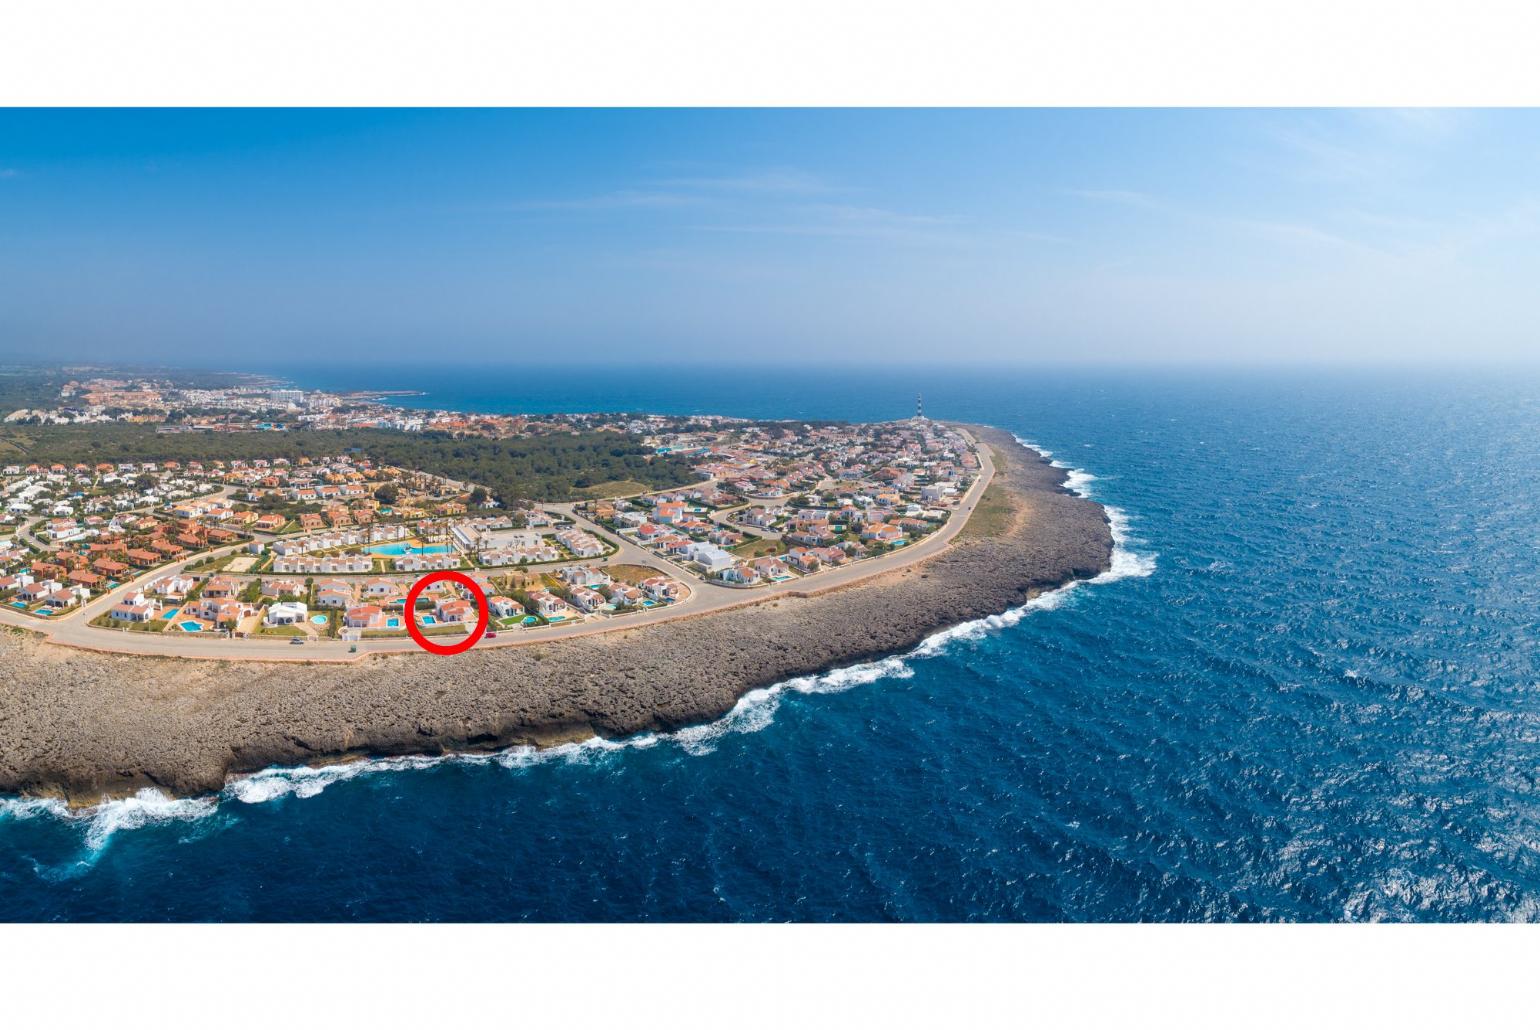 Aerial view showing location of Villa Mar